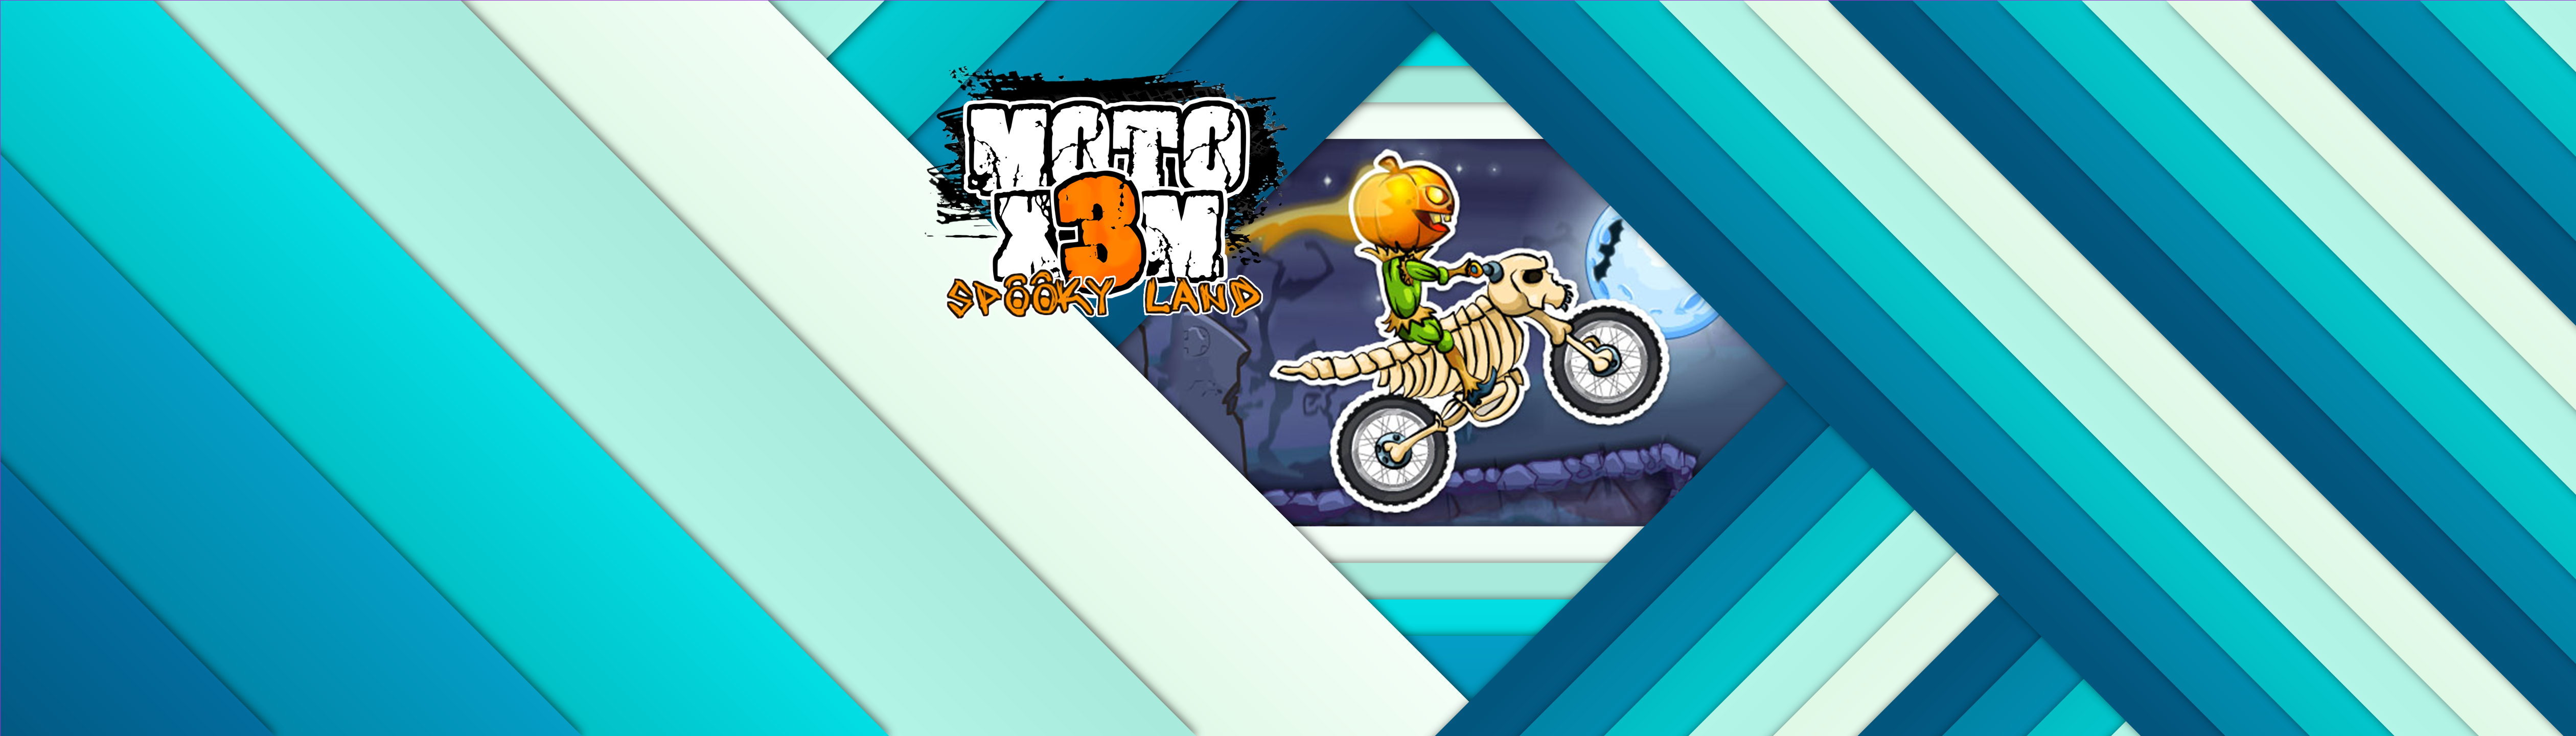 Moto X3M Spooky Land  Play with Libero Fun!